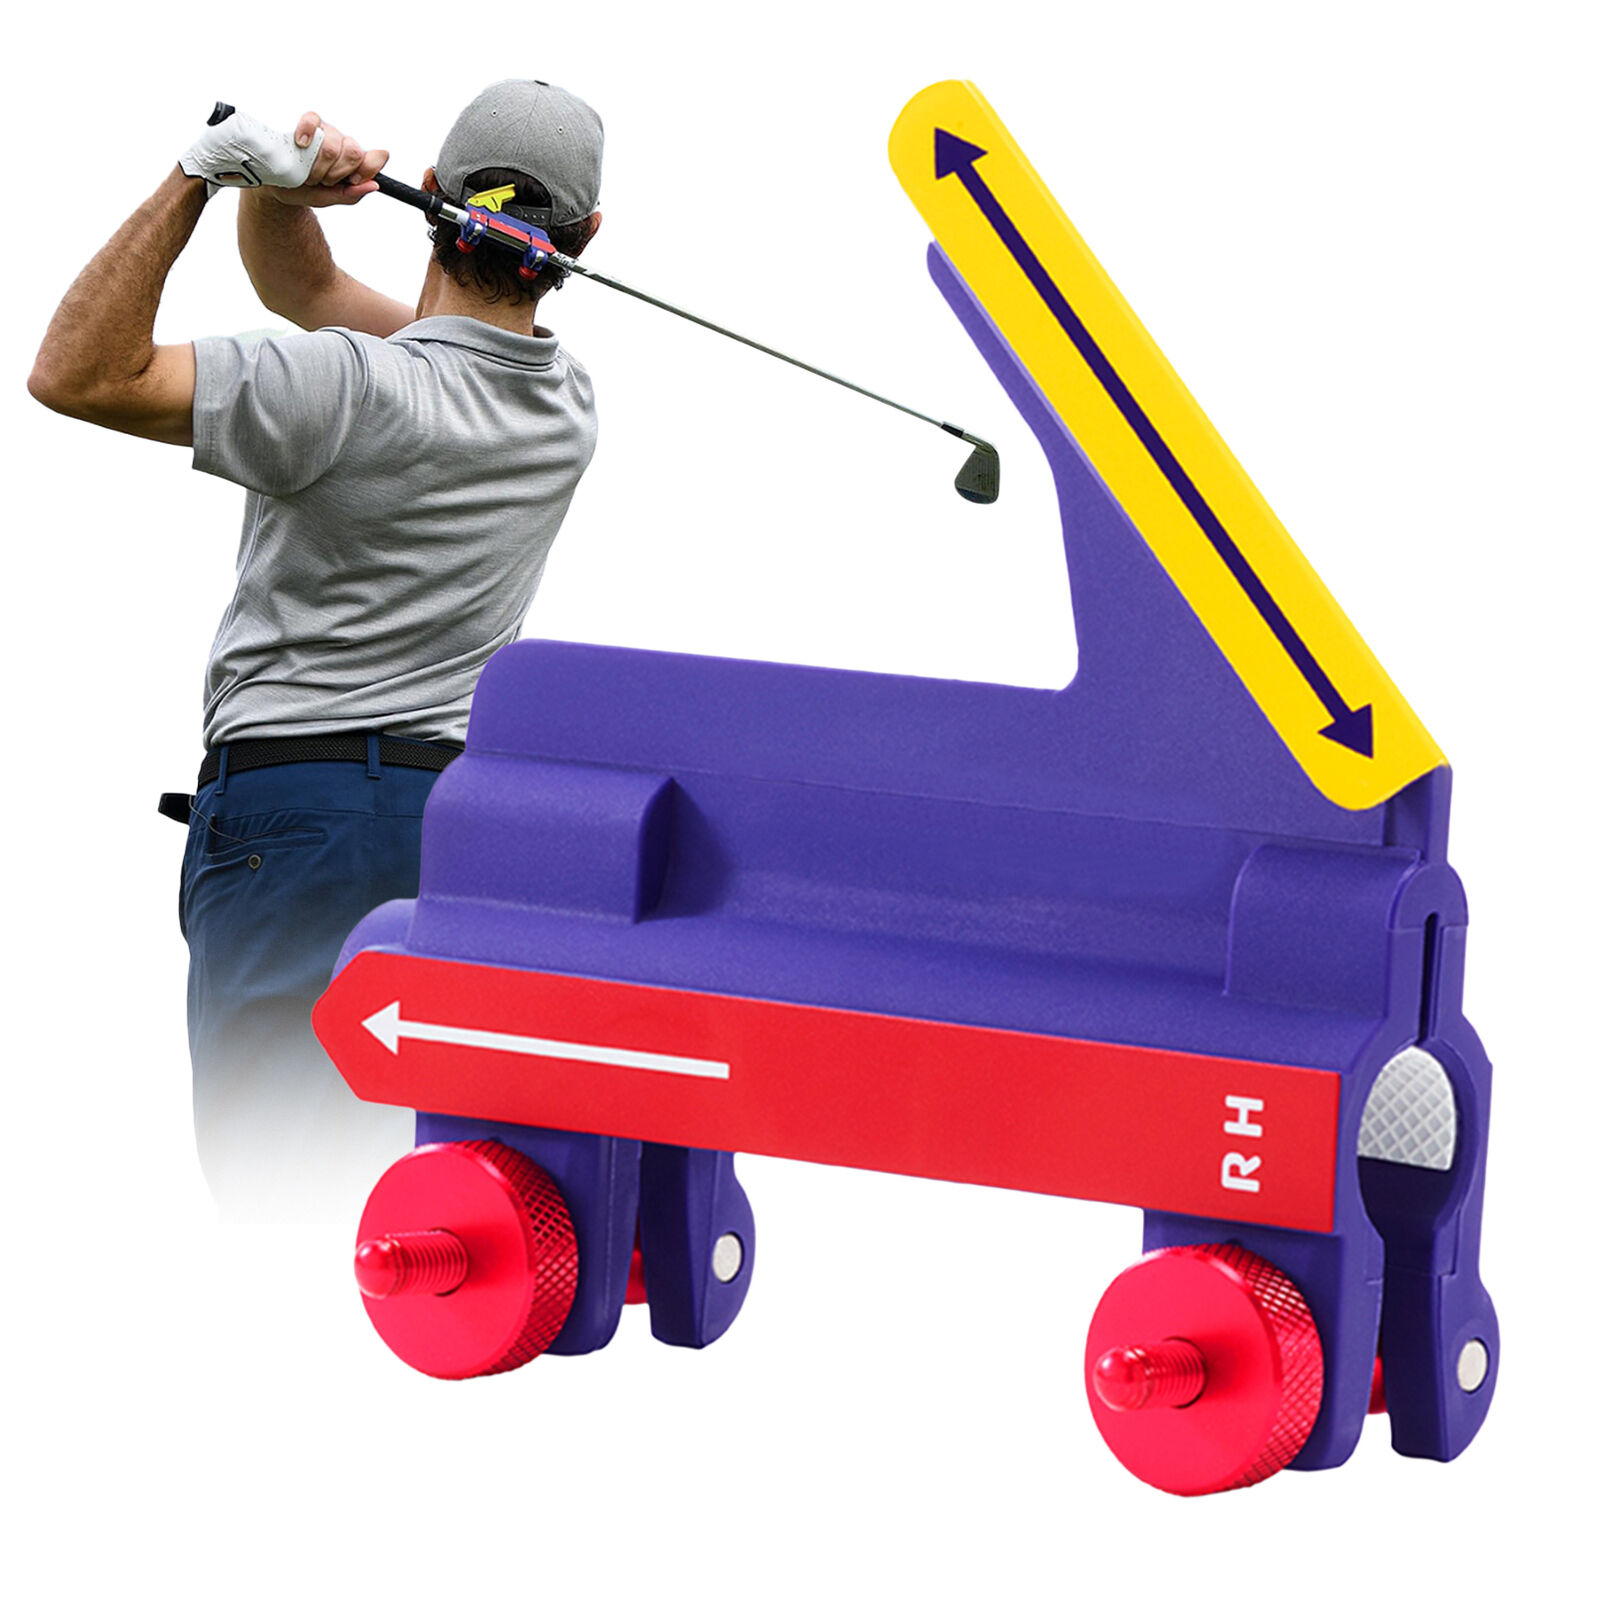 Golf Straightaway Swing Trainer Golf Hitting Trainer Swinging Aid 10.2x4x10.2cm